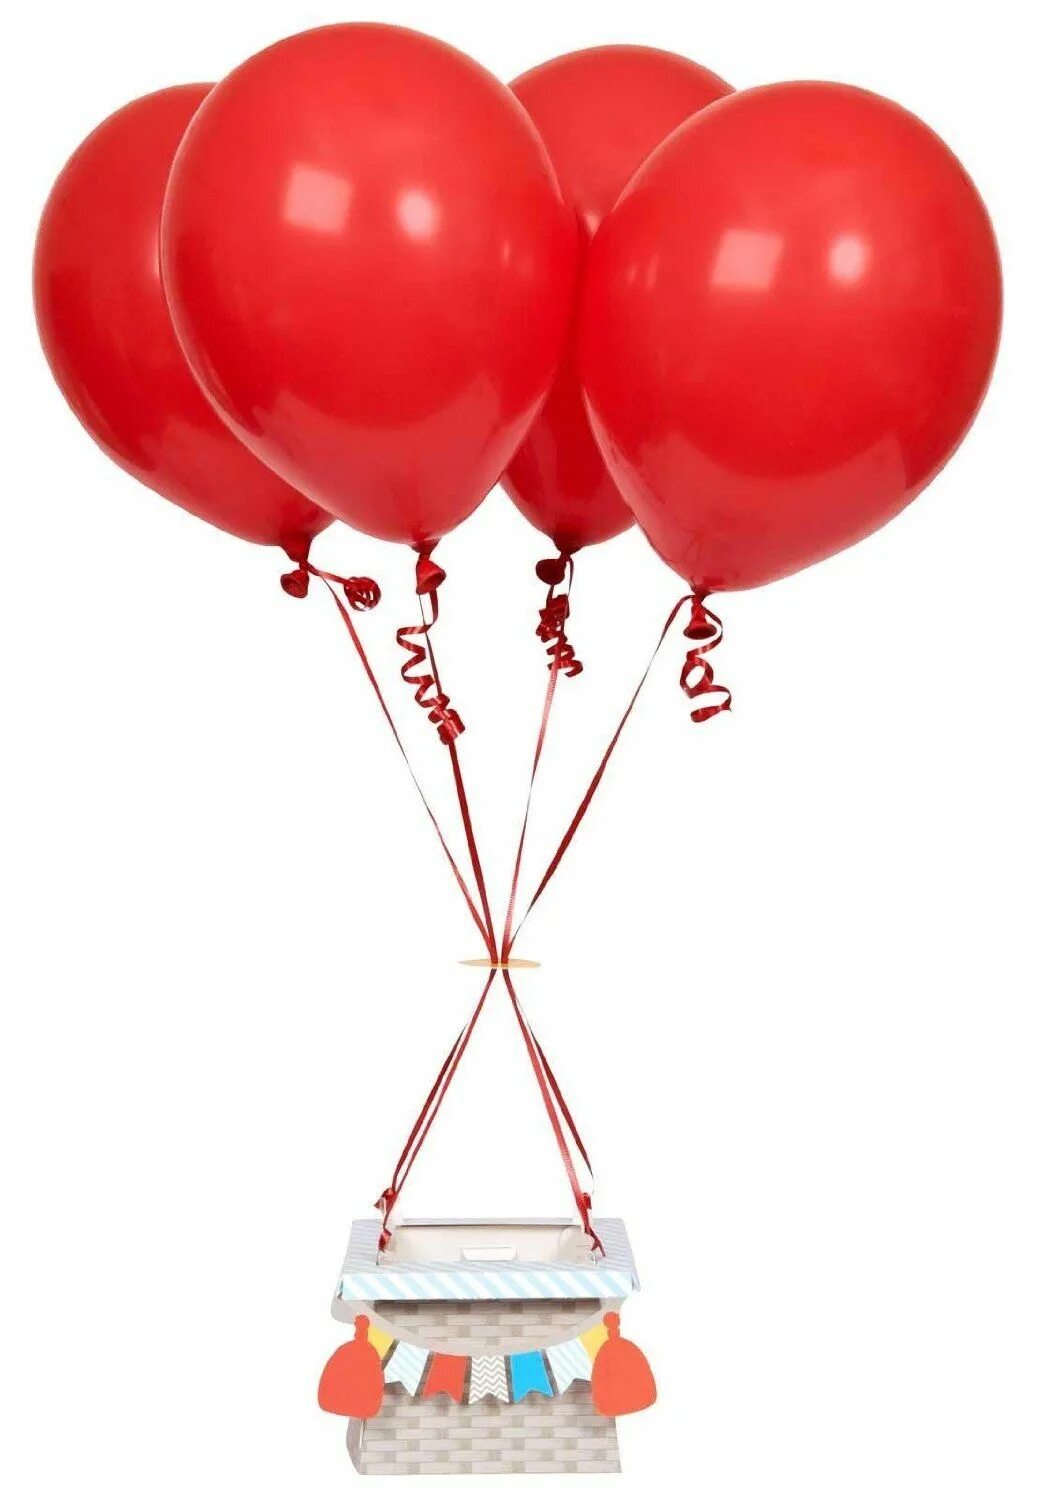 Три воздушных шарика. Воздушный шарик. Красный шарик. Красный воздушный шарик. Шарики на прозрачном фоне.